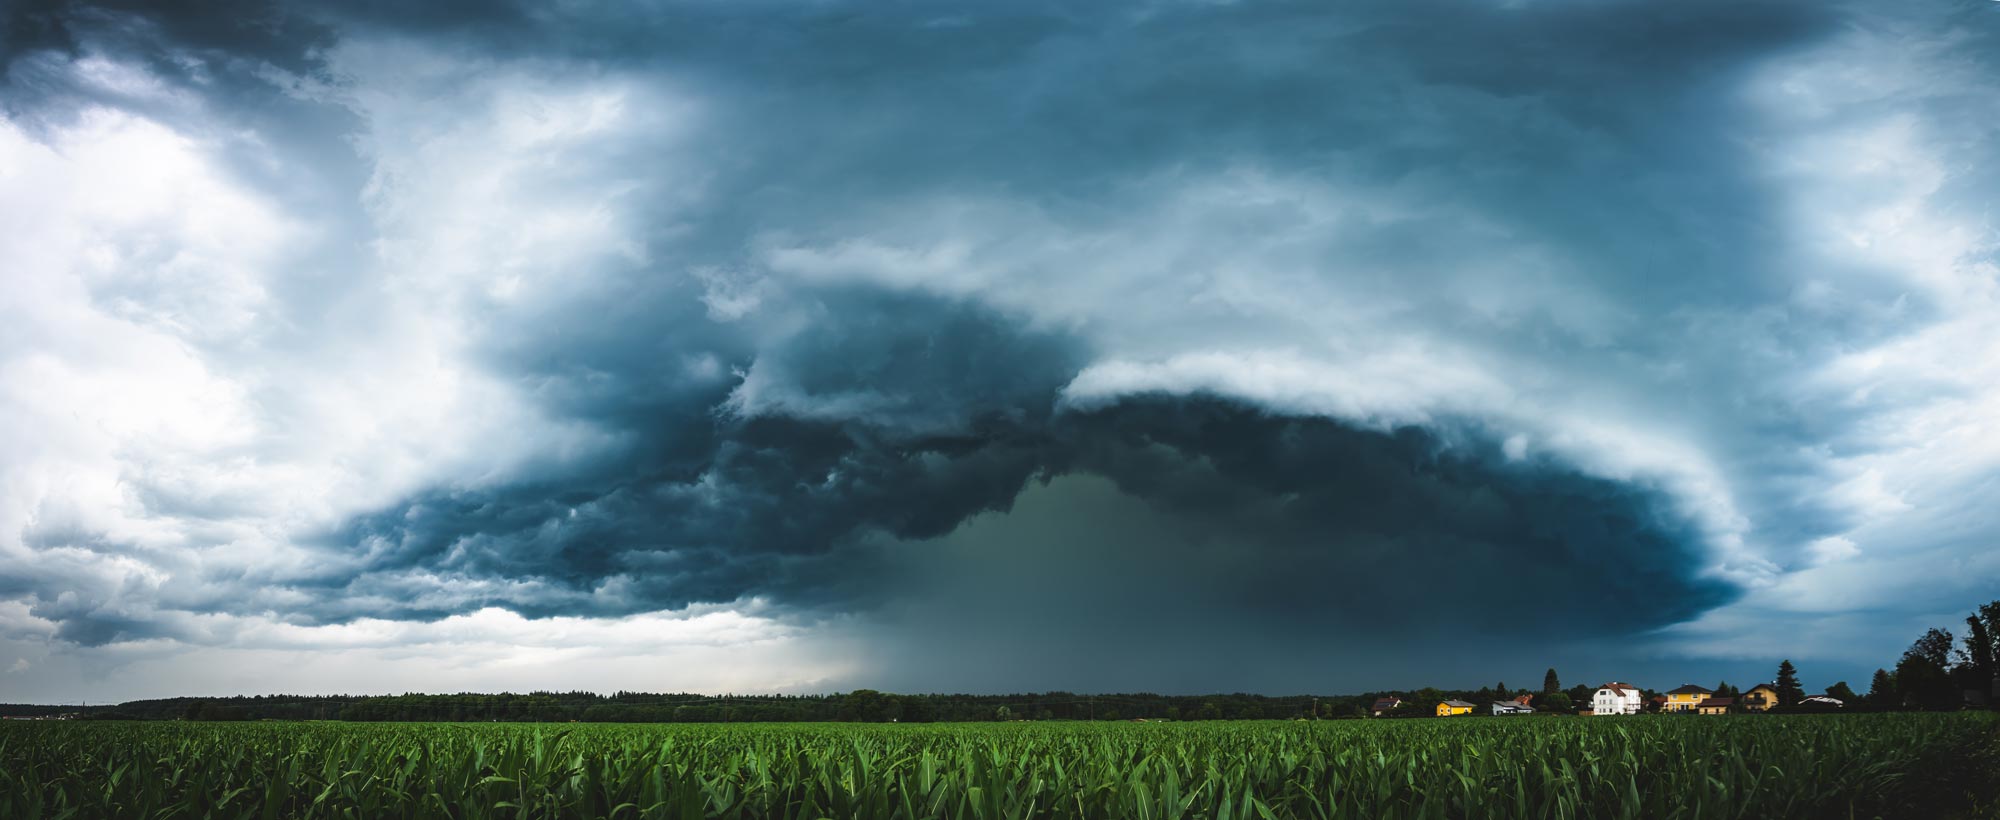 dark thunderstorm over corn field